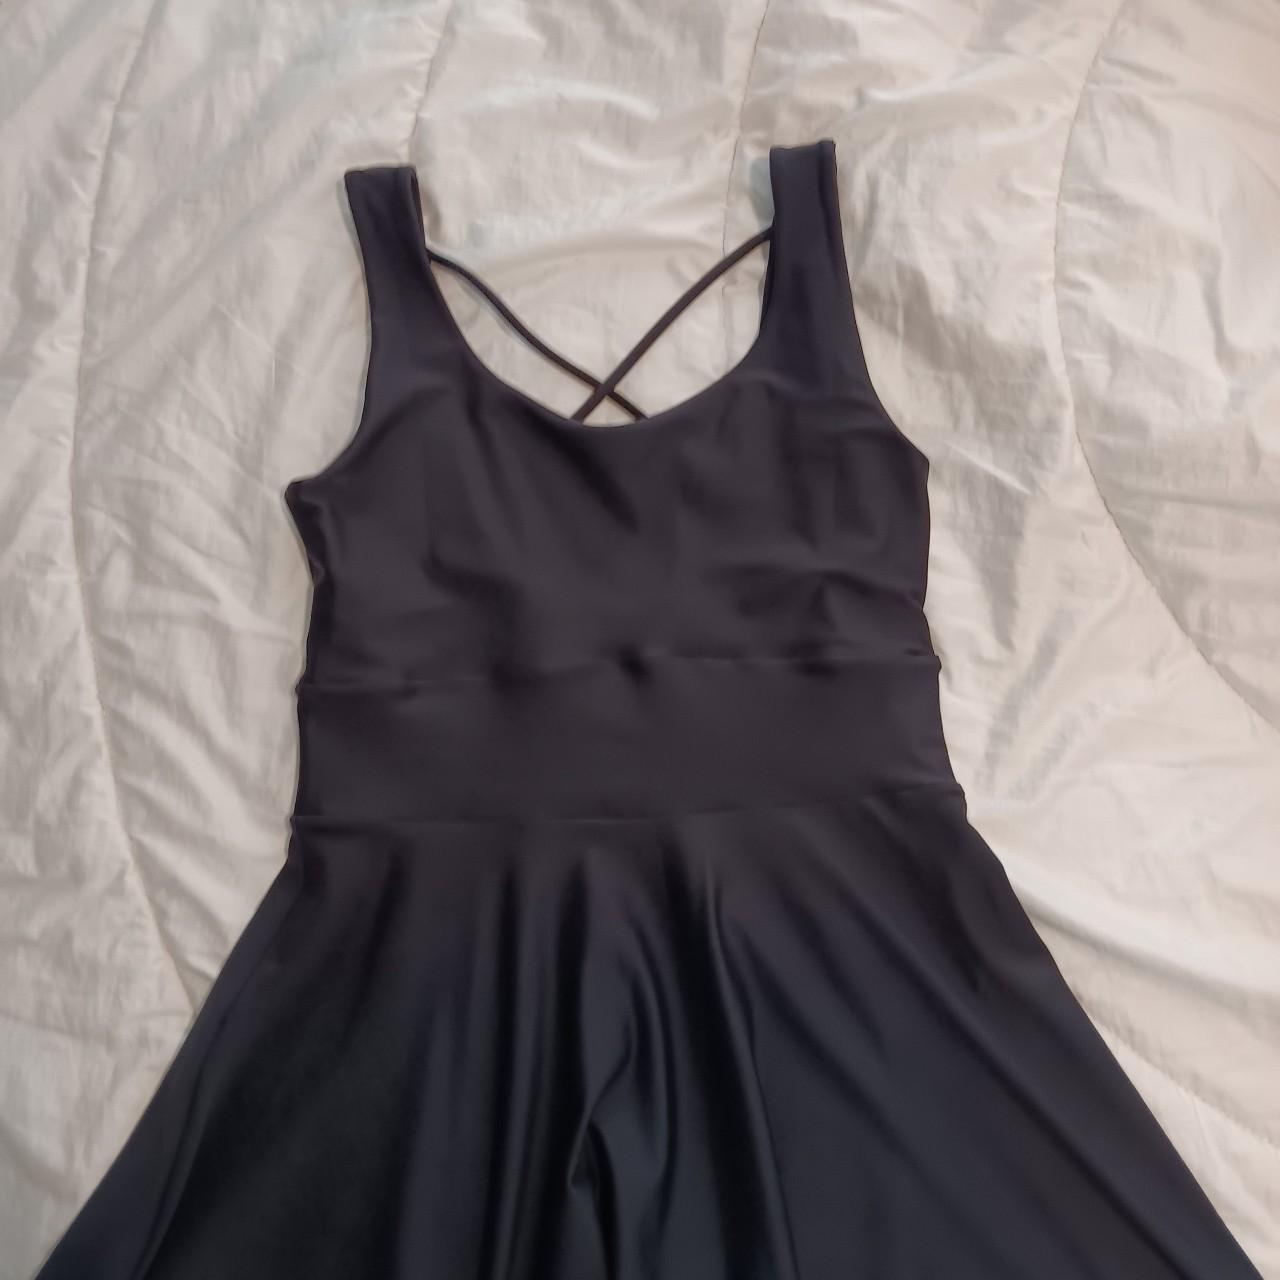 Exotica athletica black midi dress. Re-pop as a bit... - Depop